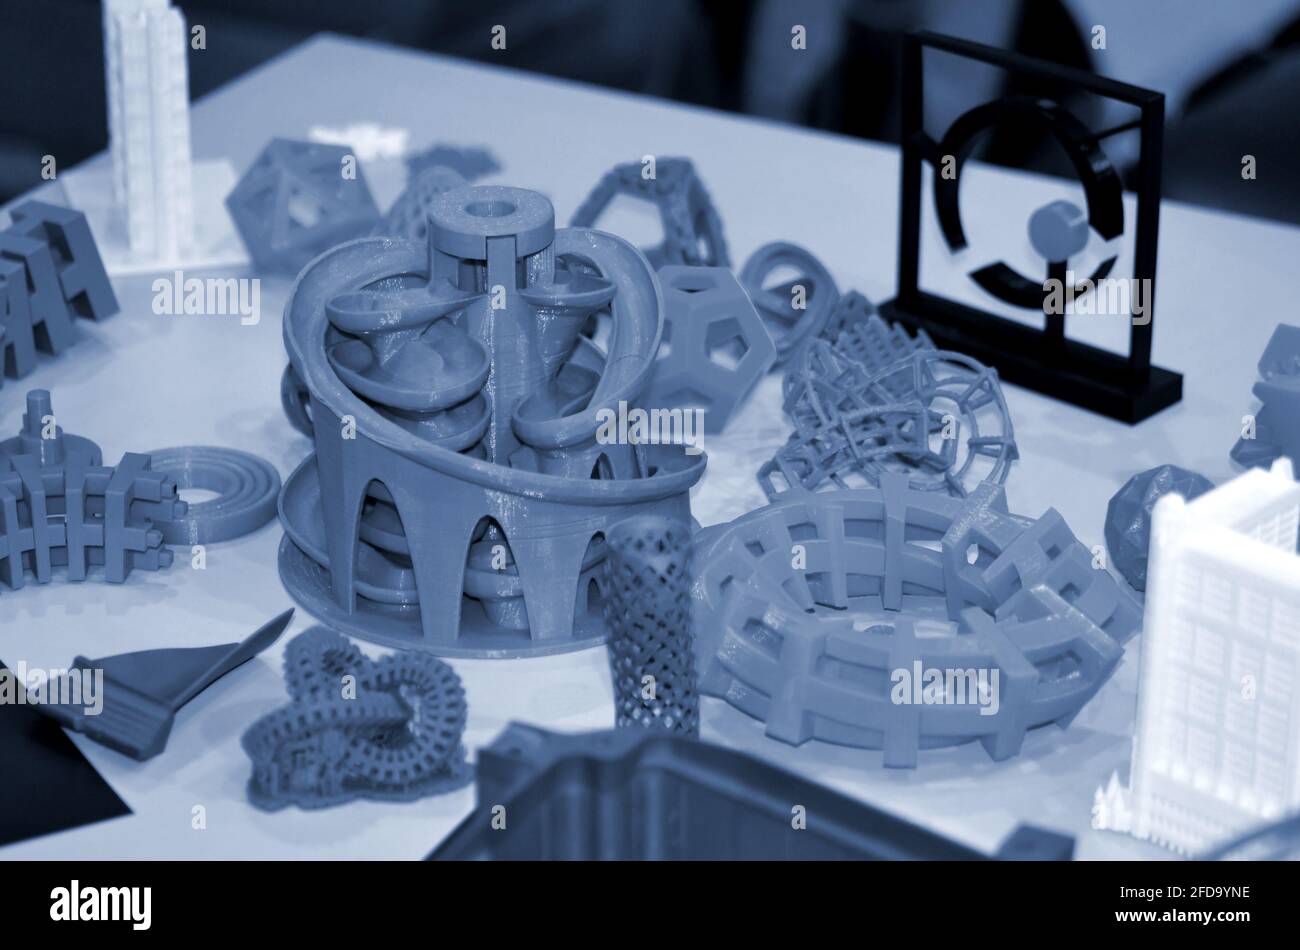 Moduli stampati da una stampante 3d. Oggetti stampati su una stampante 3d  su un tavolo Foto stock - Alamy